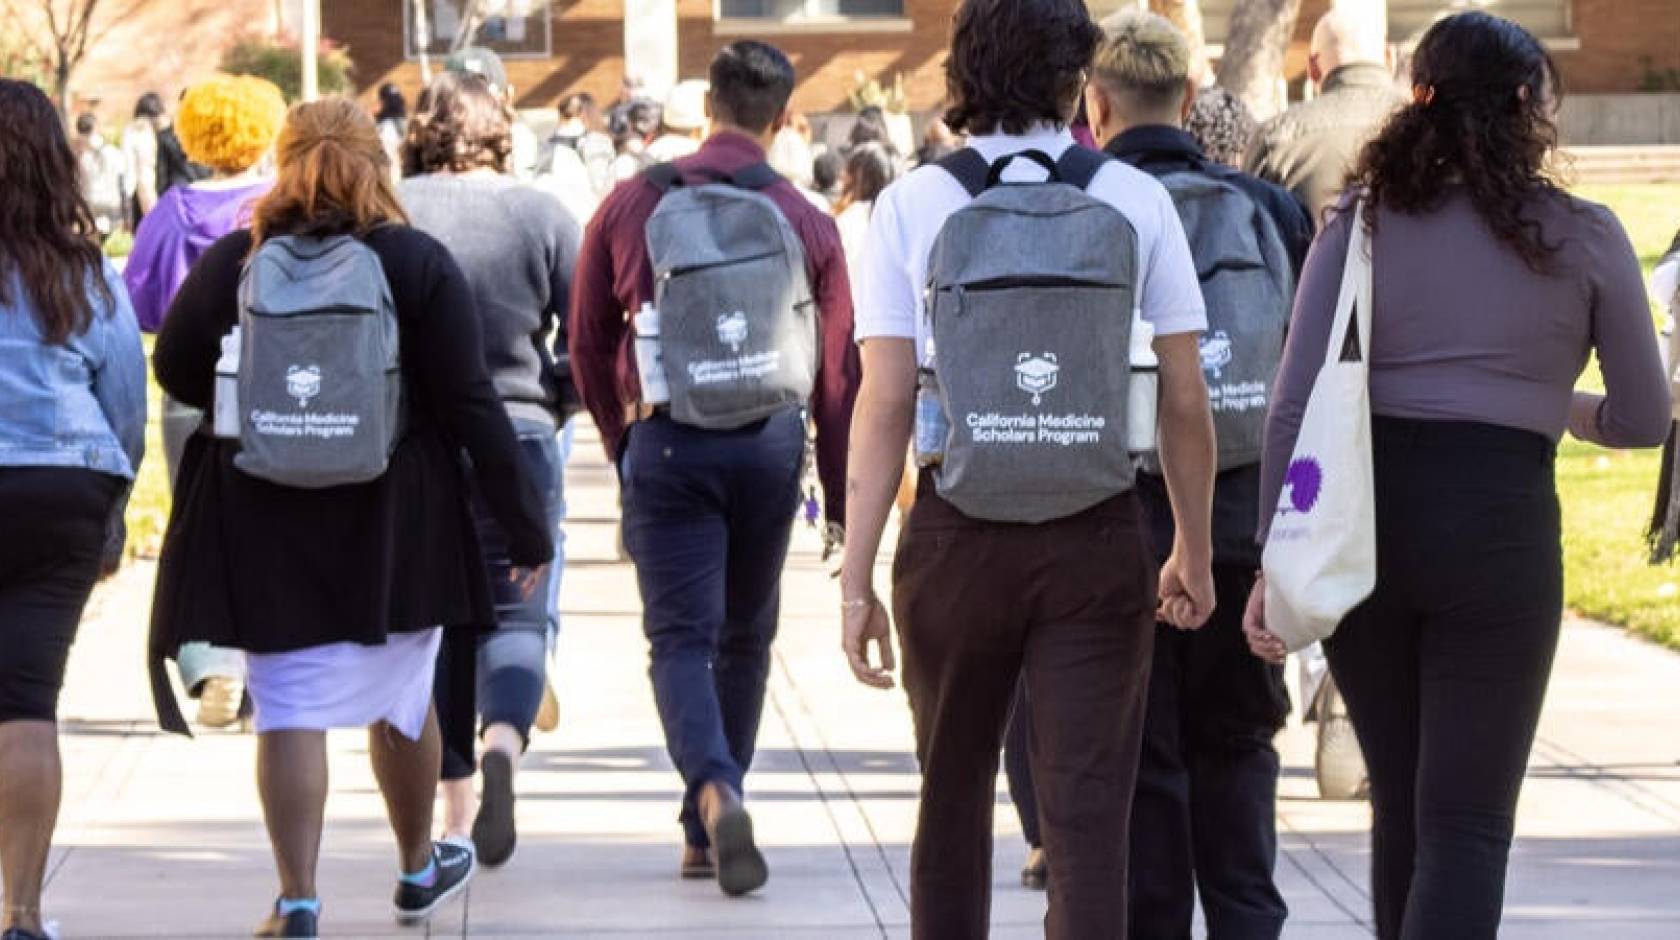 Students walking on UC Riverside campus with California Medicine Scholars Program backpacks